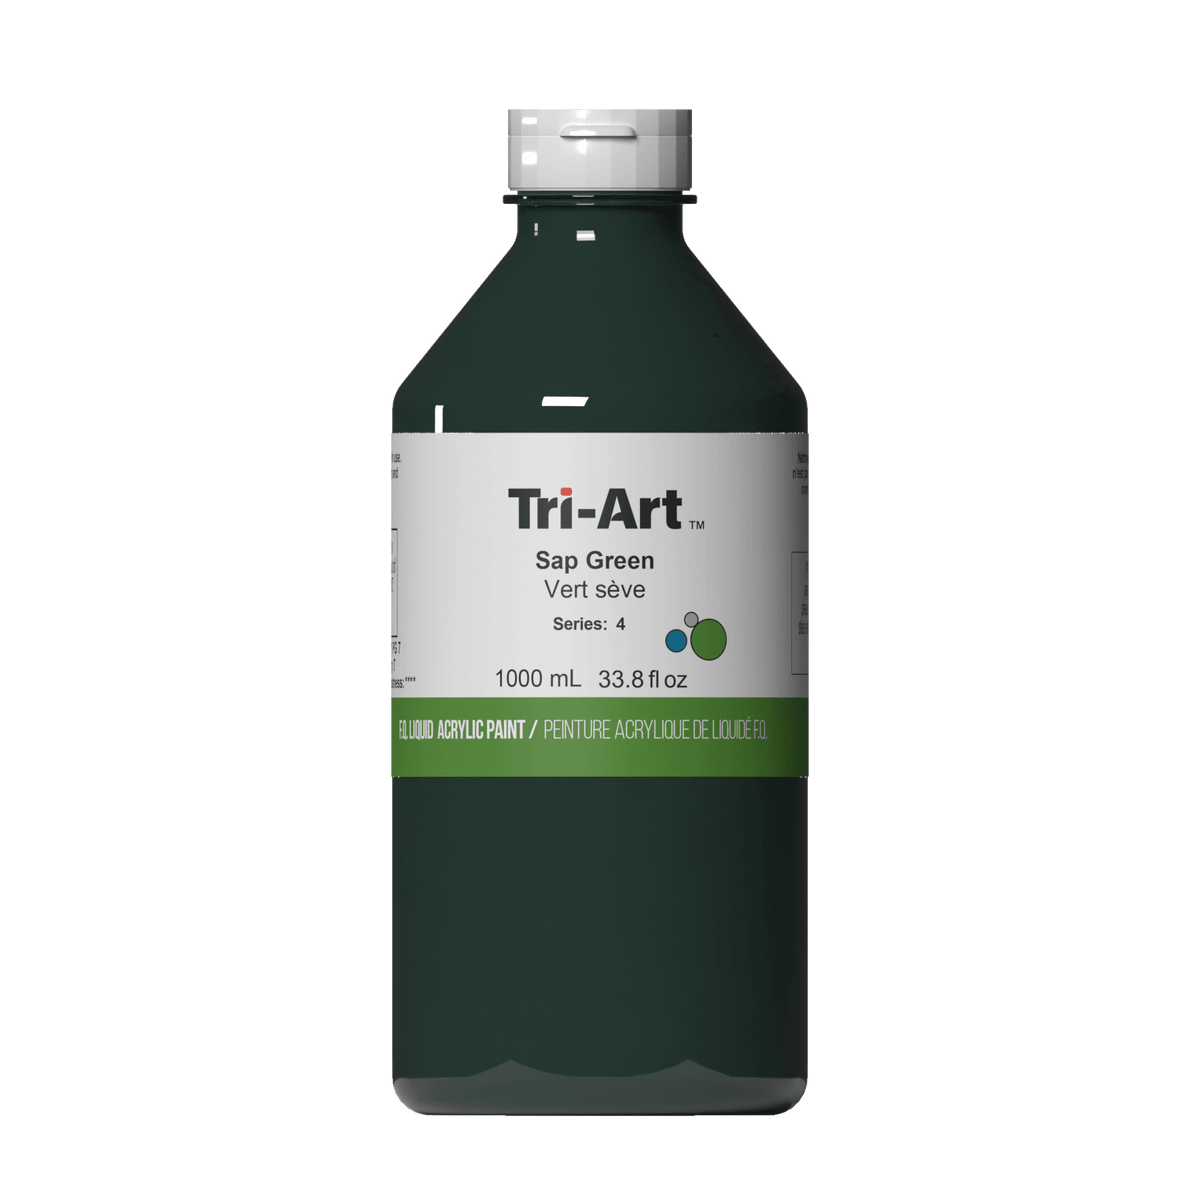 Tri-Art Liquids - Sap Green - Tri-Art Mfg.